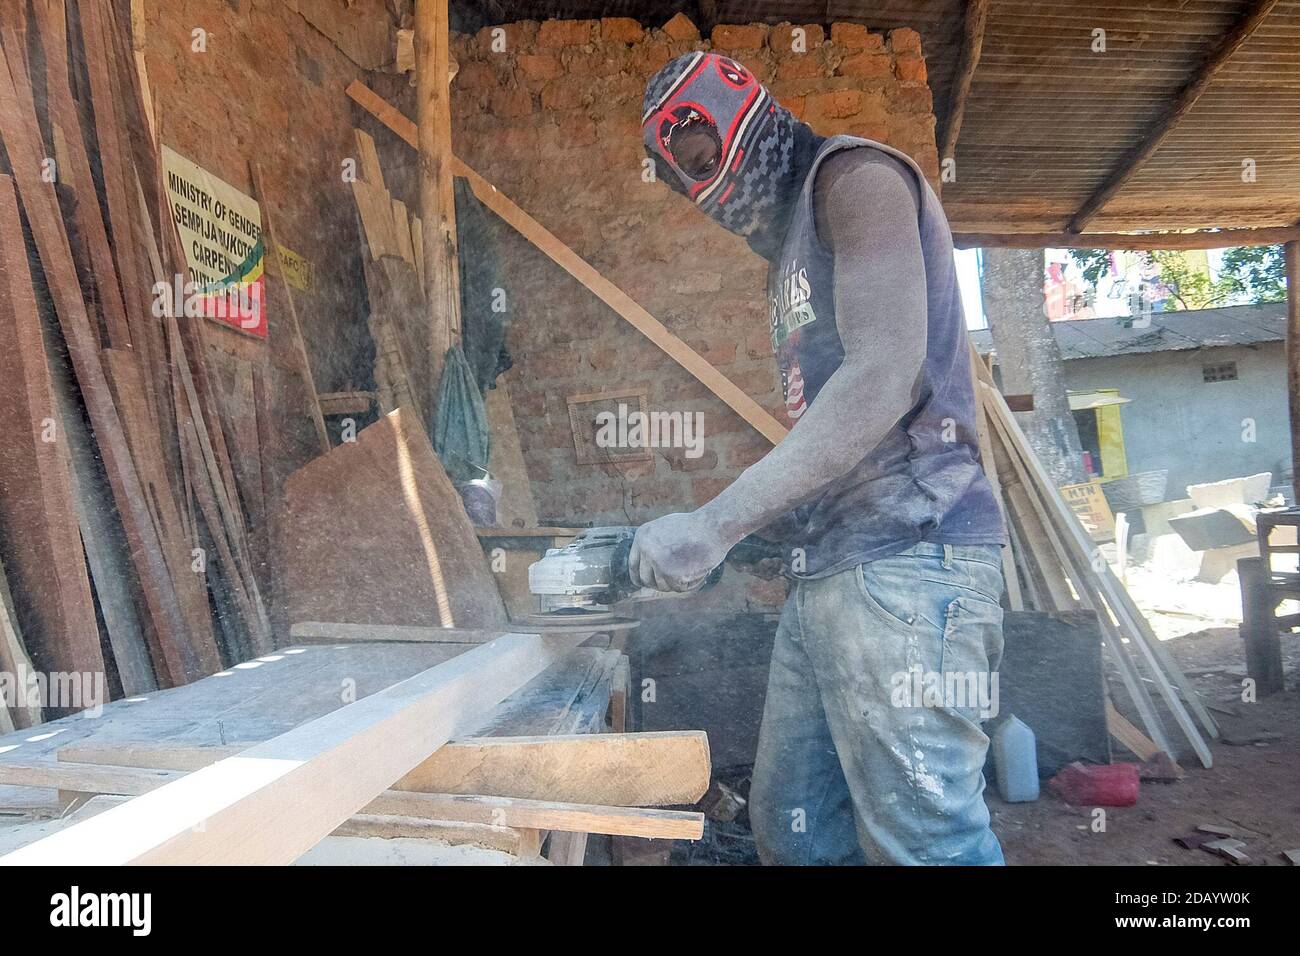 Carpenter Herbert Mubiru, 26, sands the wood he uses for his furniture business in the Bukoto township of Kampala, Uganda. Stock Photo